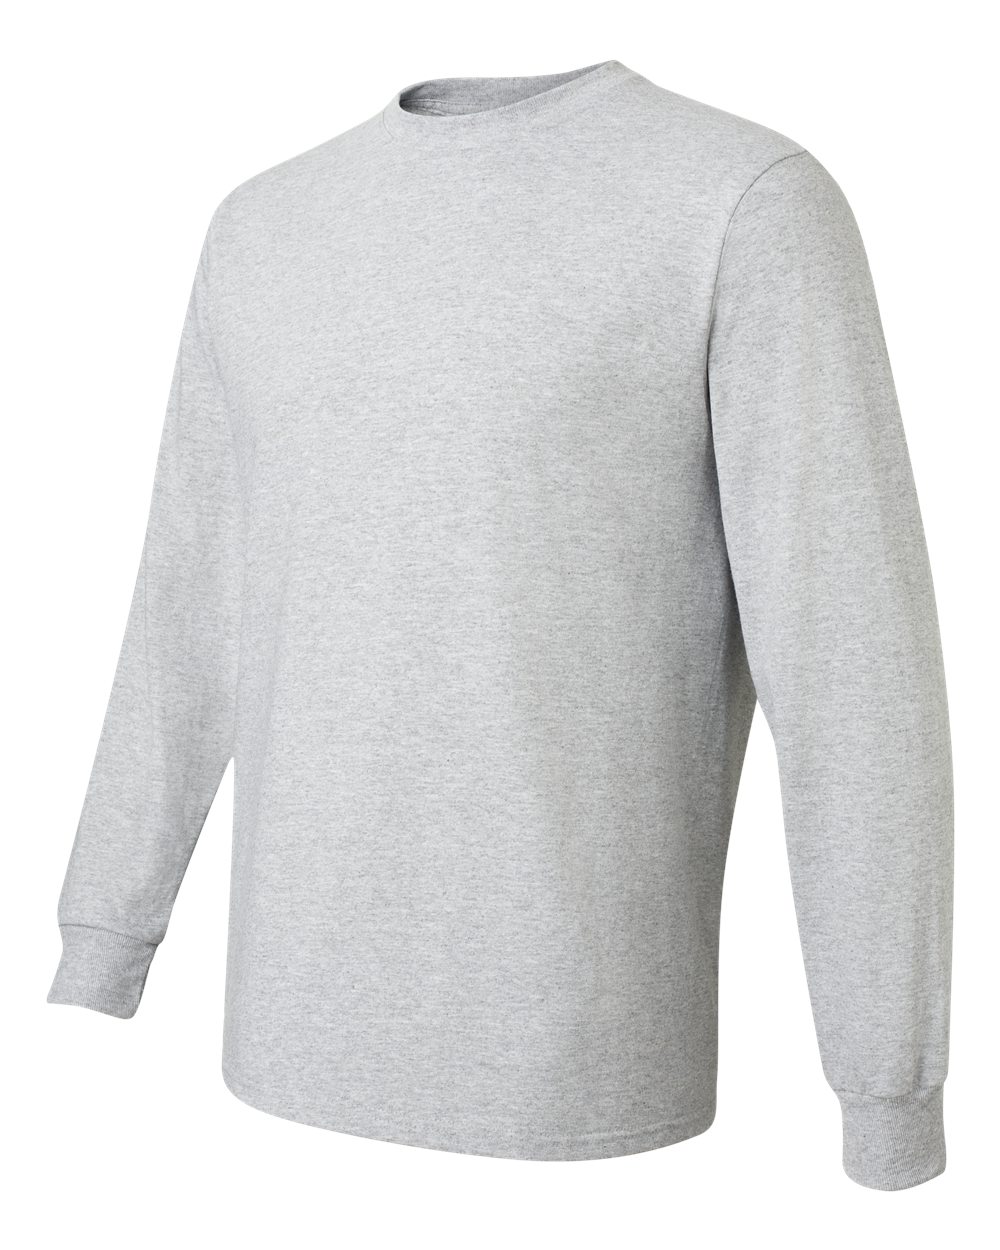 Jerzees 363LSR - HiDENSI-T Long Sleeve T-Shirt